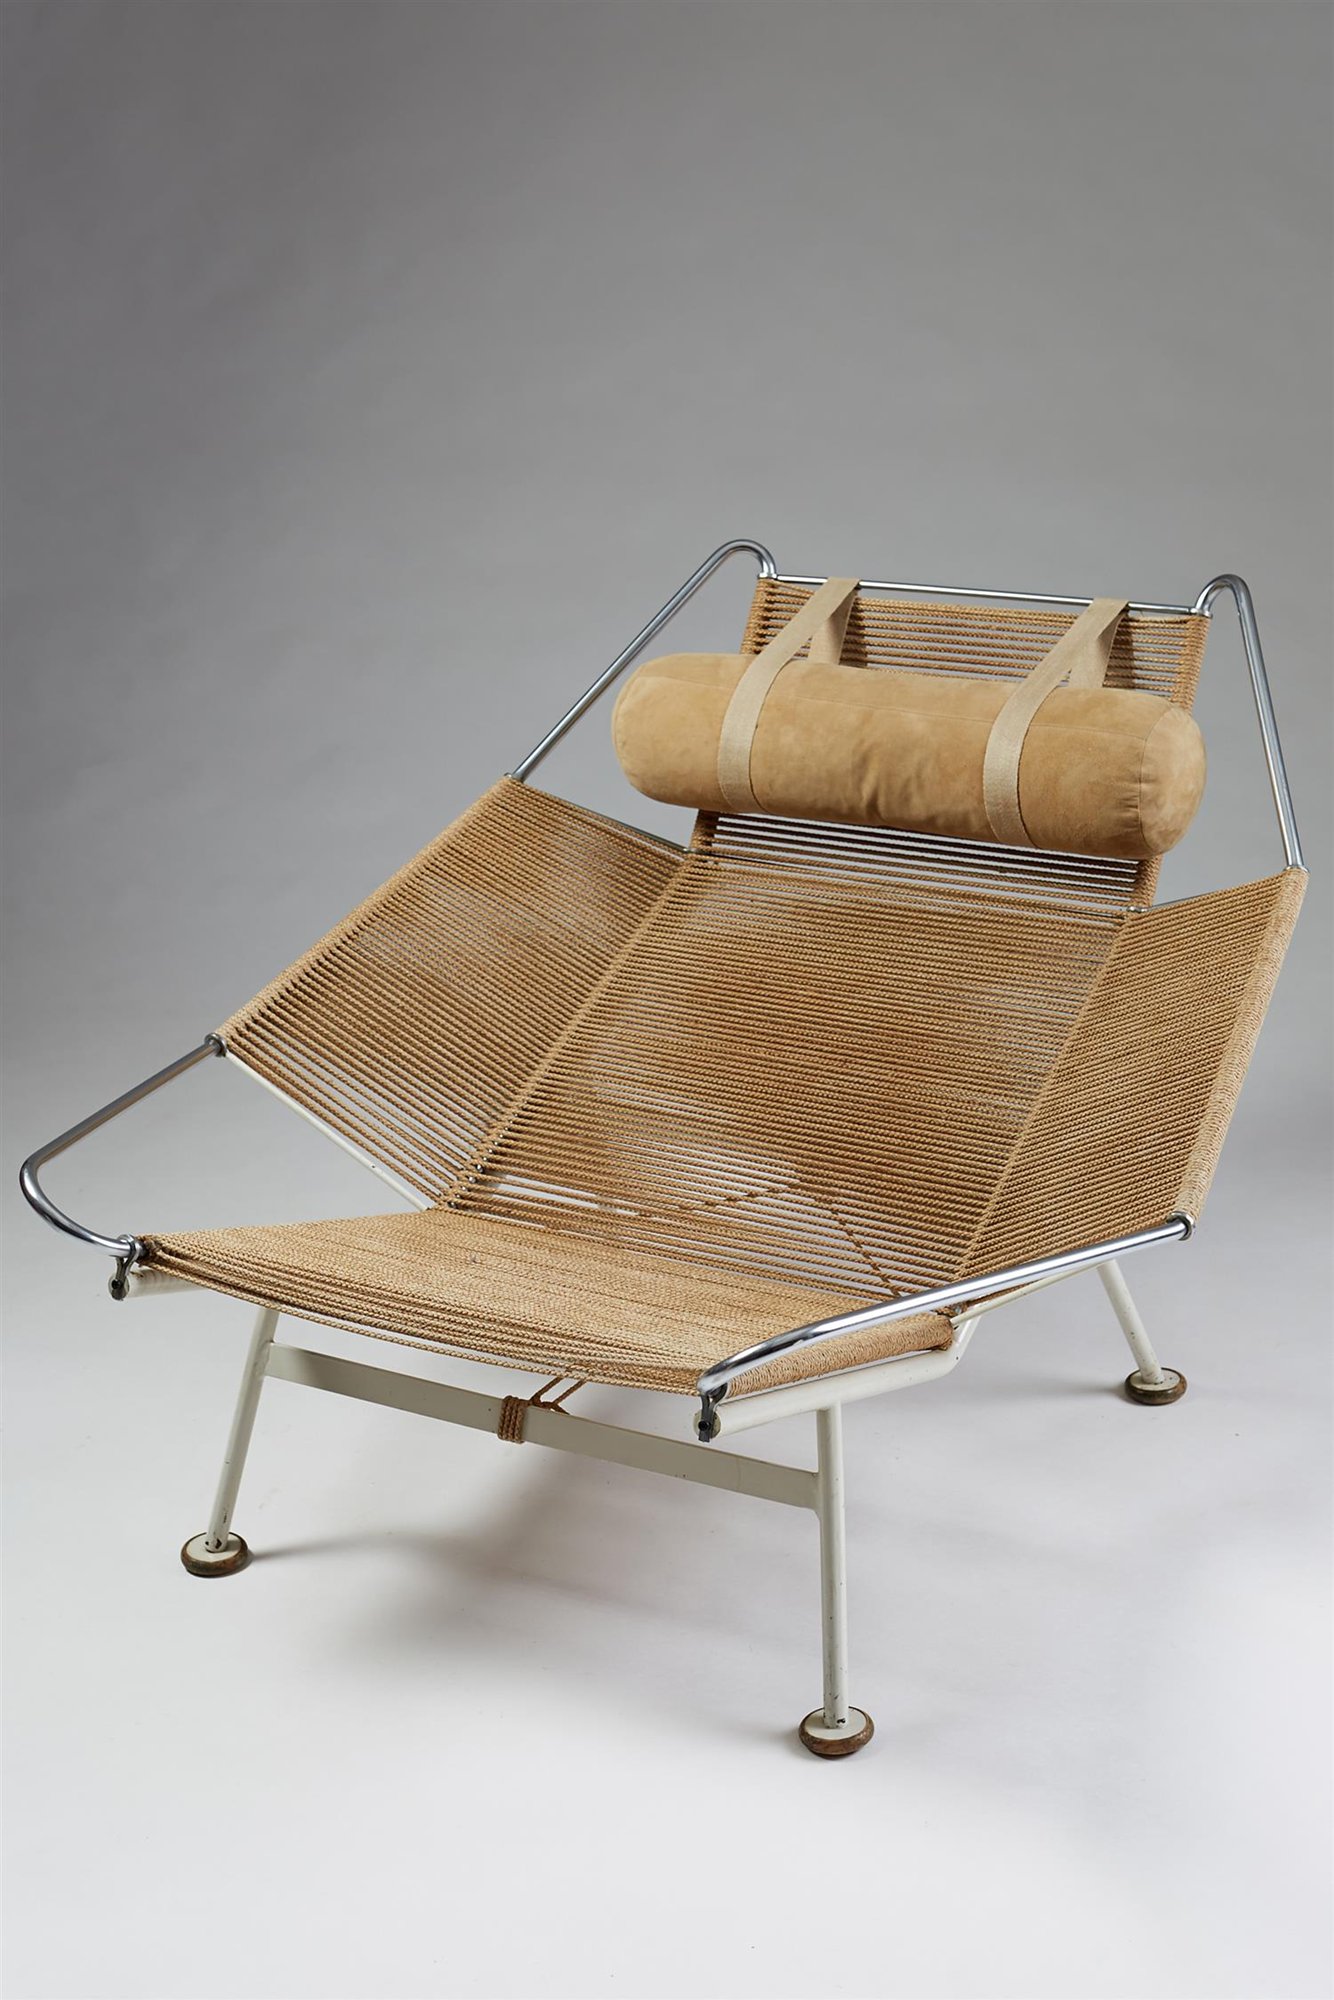 Halyard Chair Designed By Hans Wegner For Getama Denmark 1950